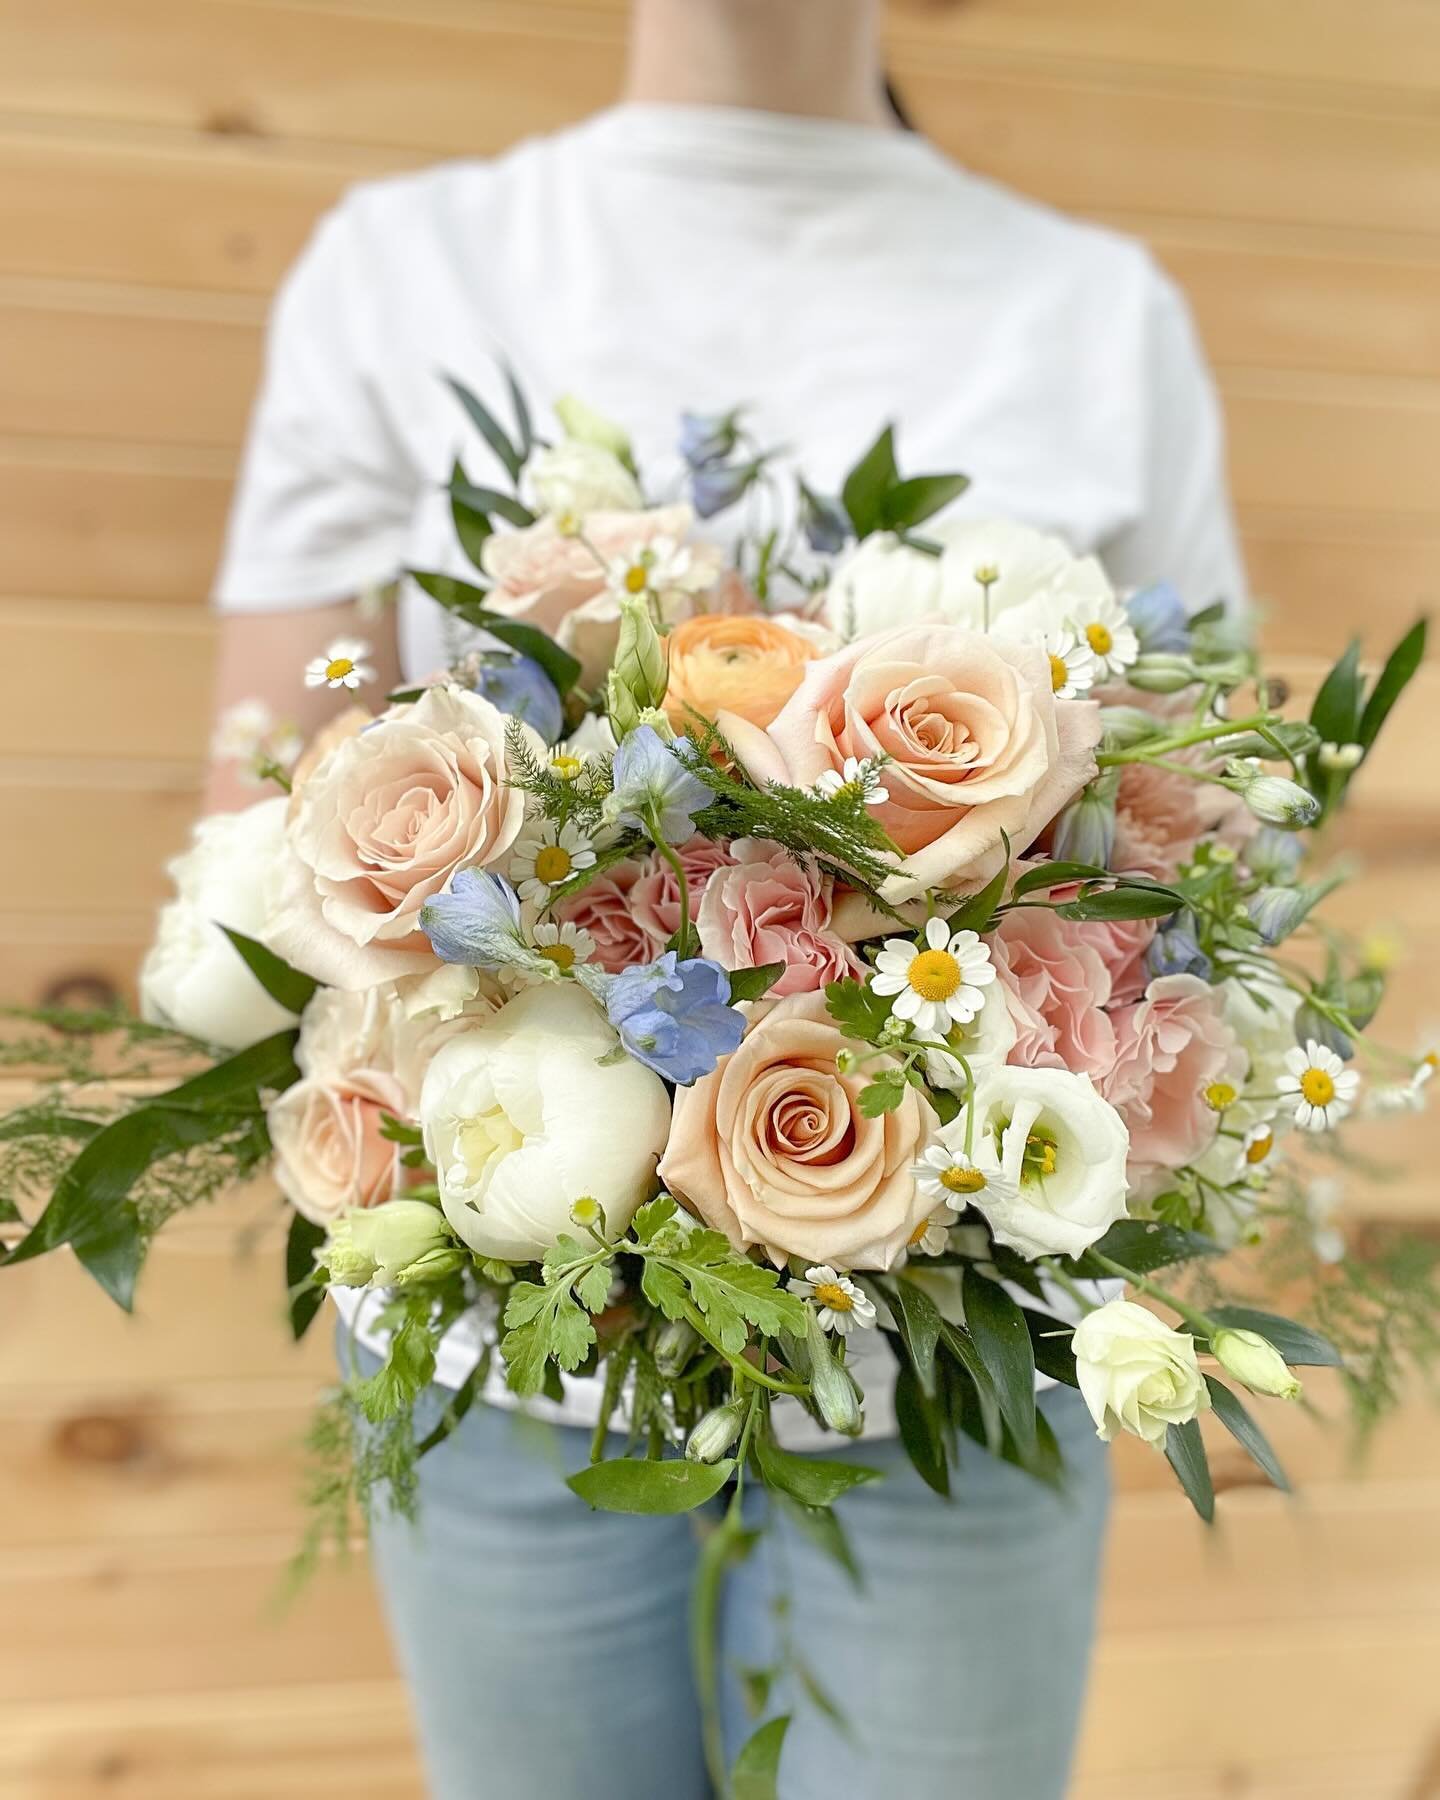 For Madison
.
.
.
.
.
#honeyandsageflowers #springbouquet #weddingflowers #weddingflorist